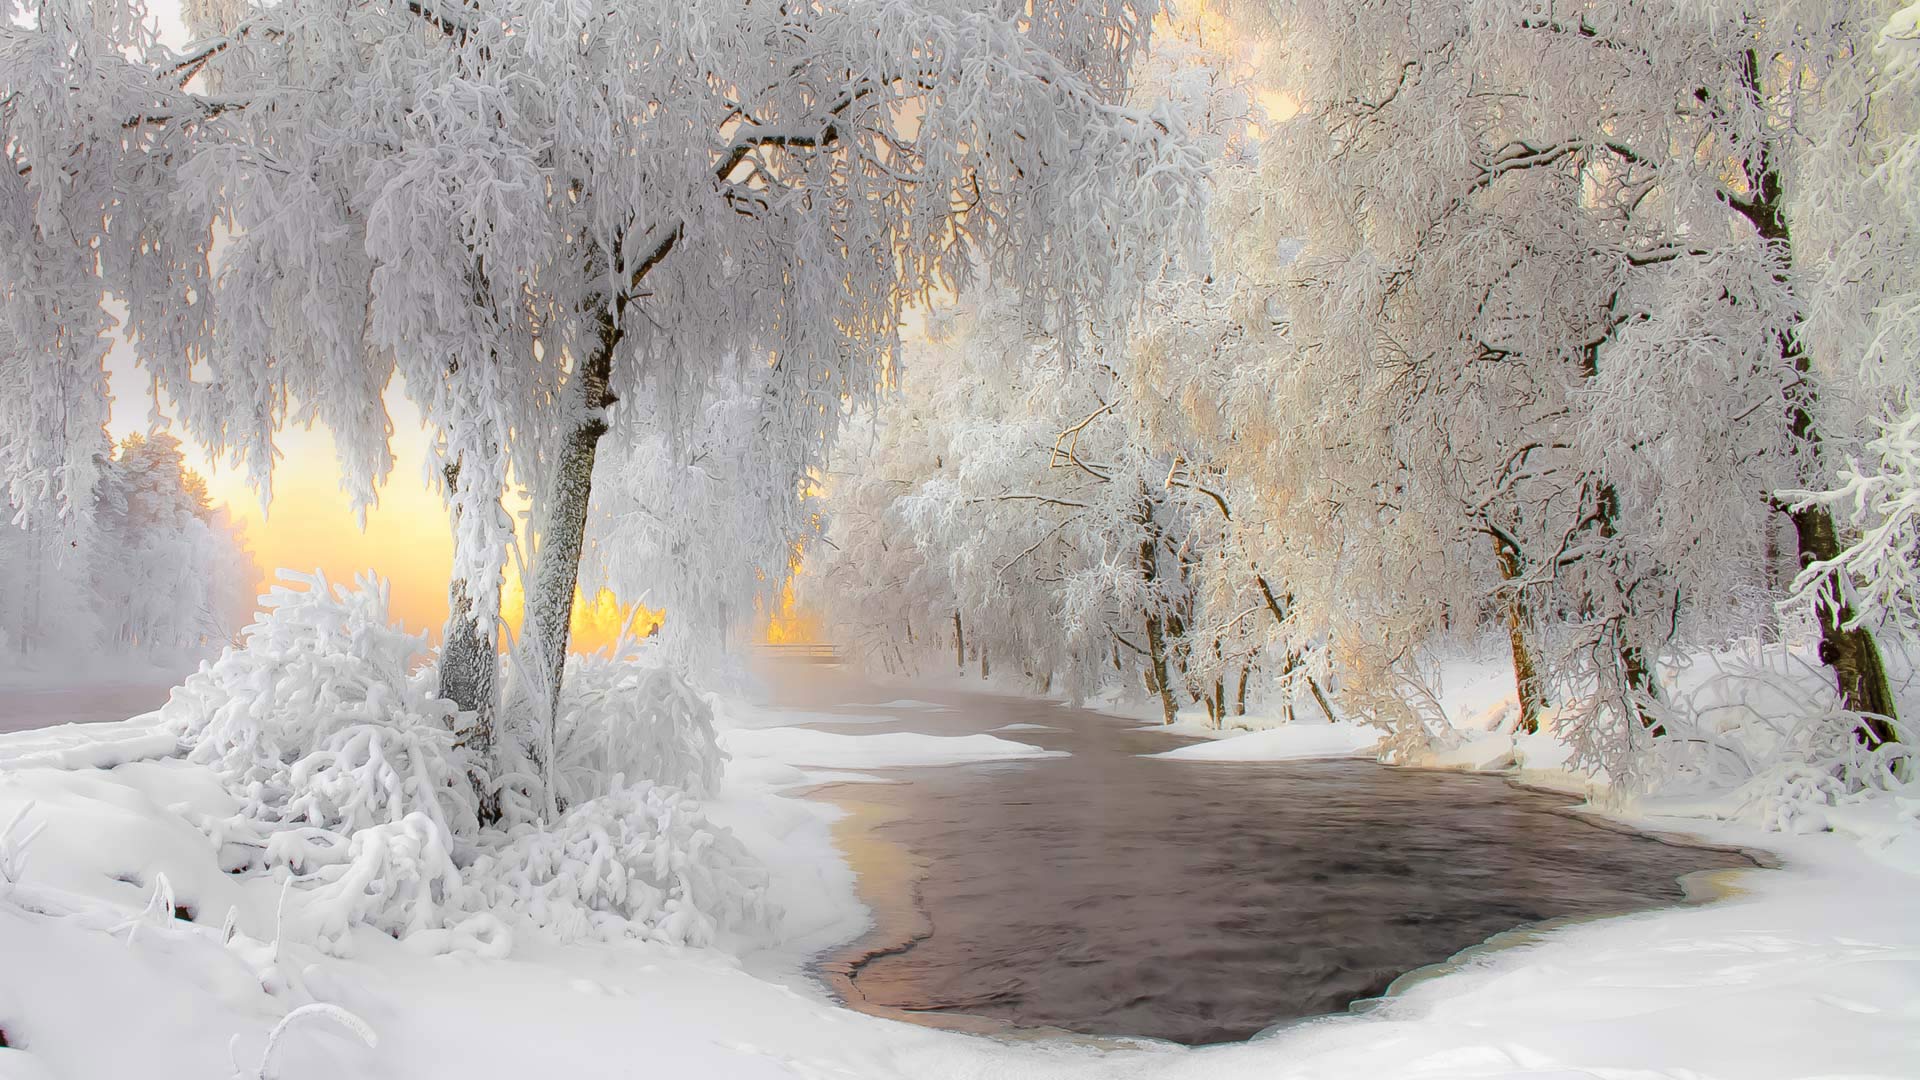 Winter scenery near Kuhmo, Finland